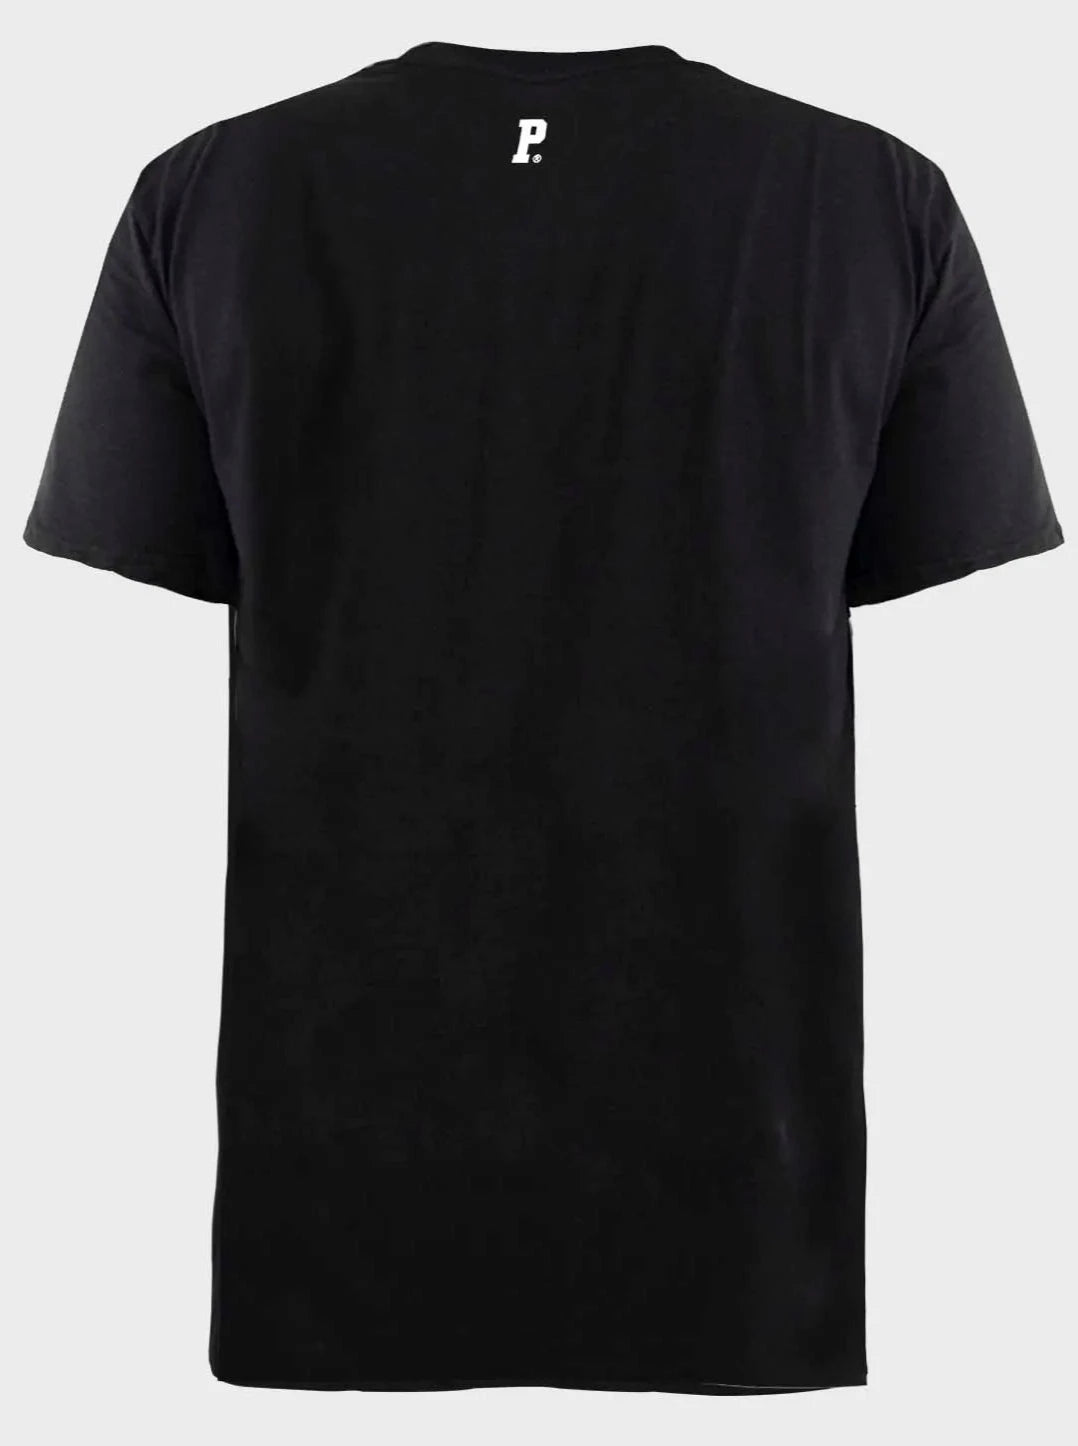 Camiseta Prison DMx Limited Edition Preta (8008201994456)